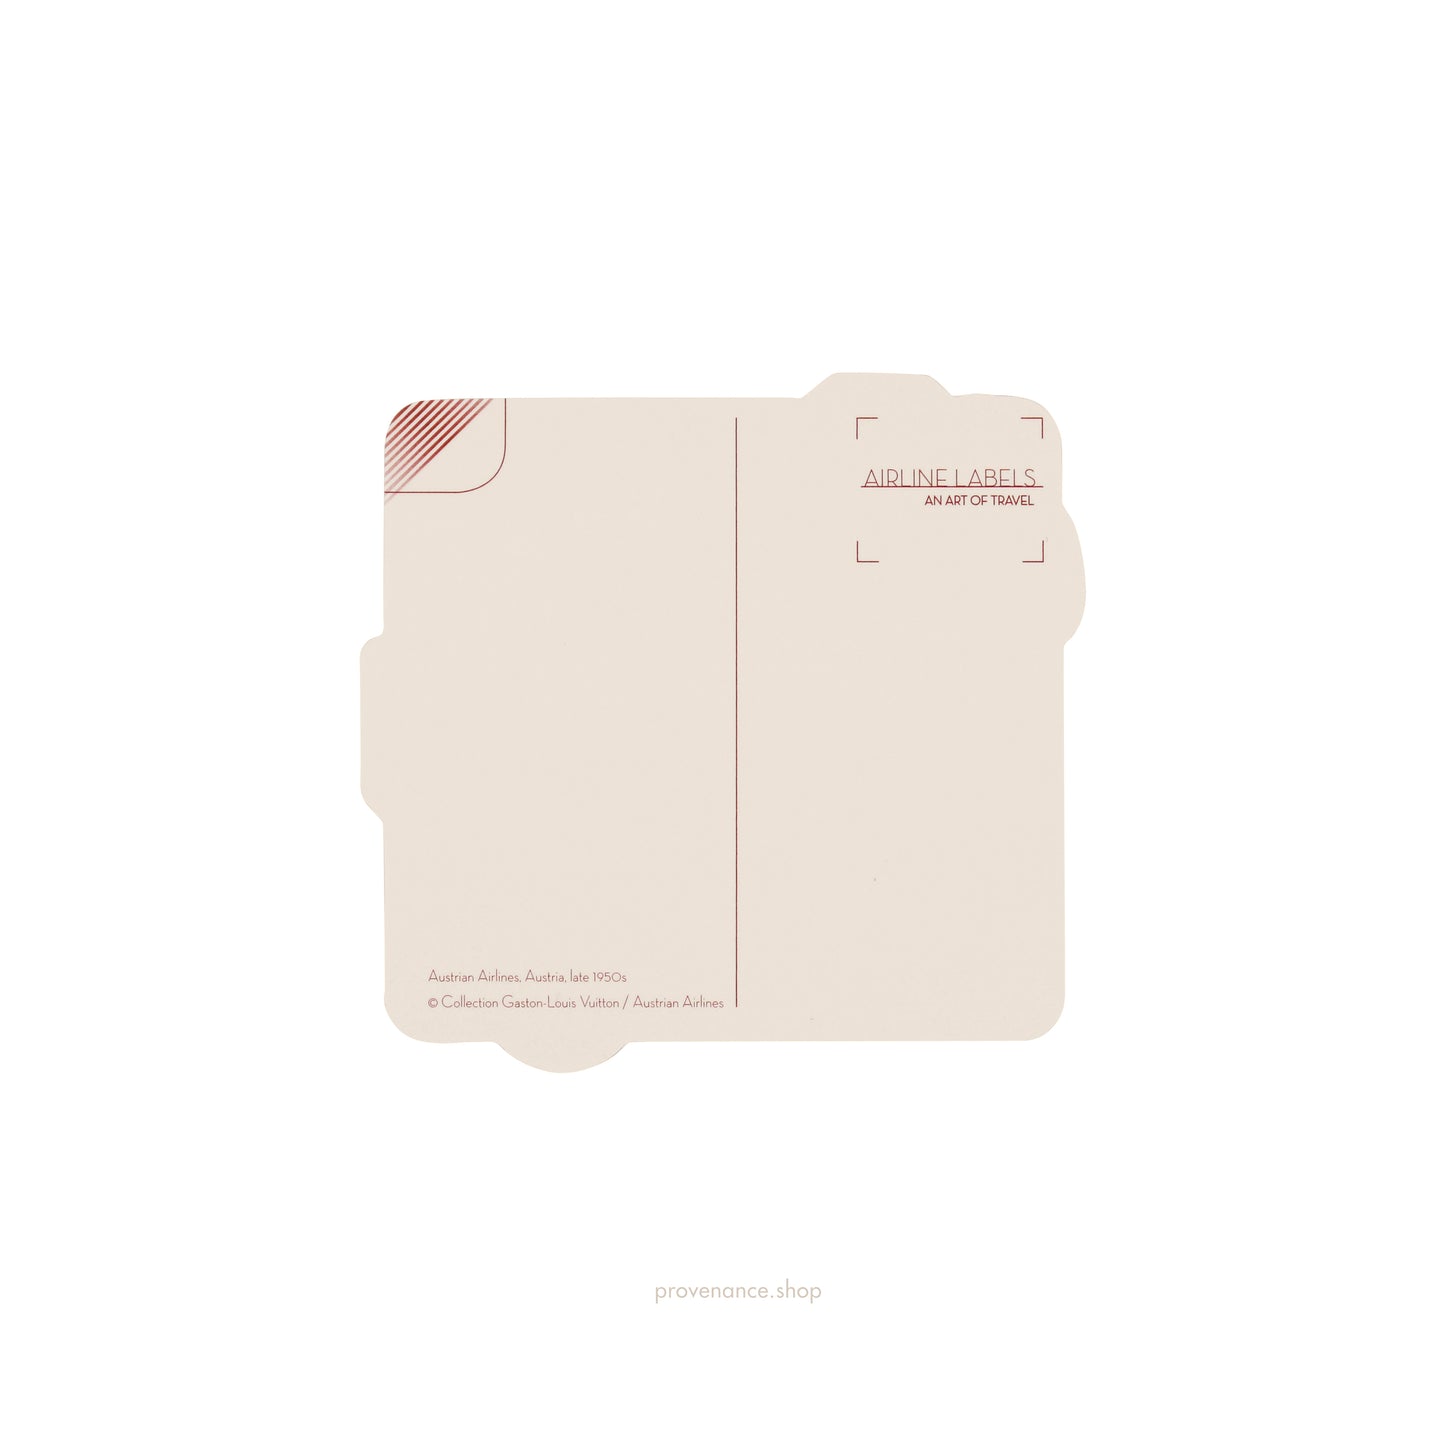 Louis Vuitton Airline Label Postcard stickers- PLACE YOUR HANDBAG HERE